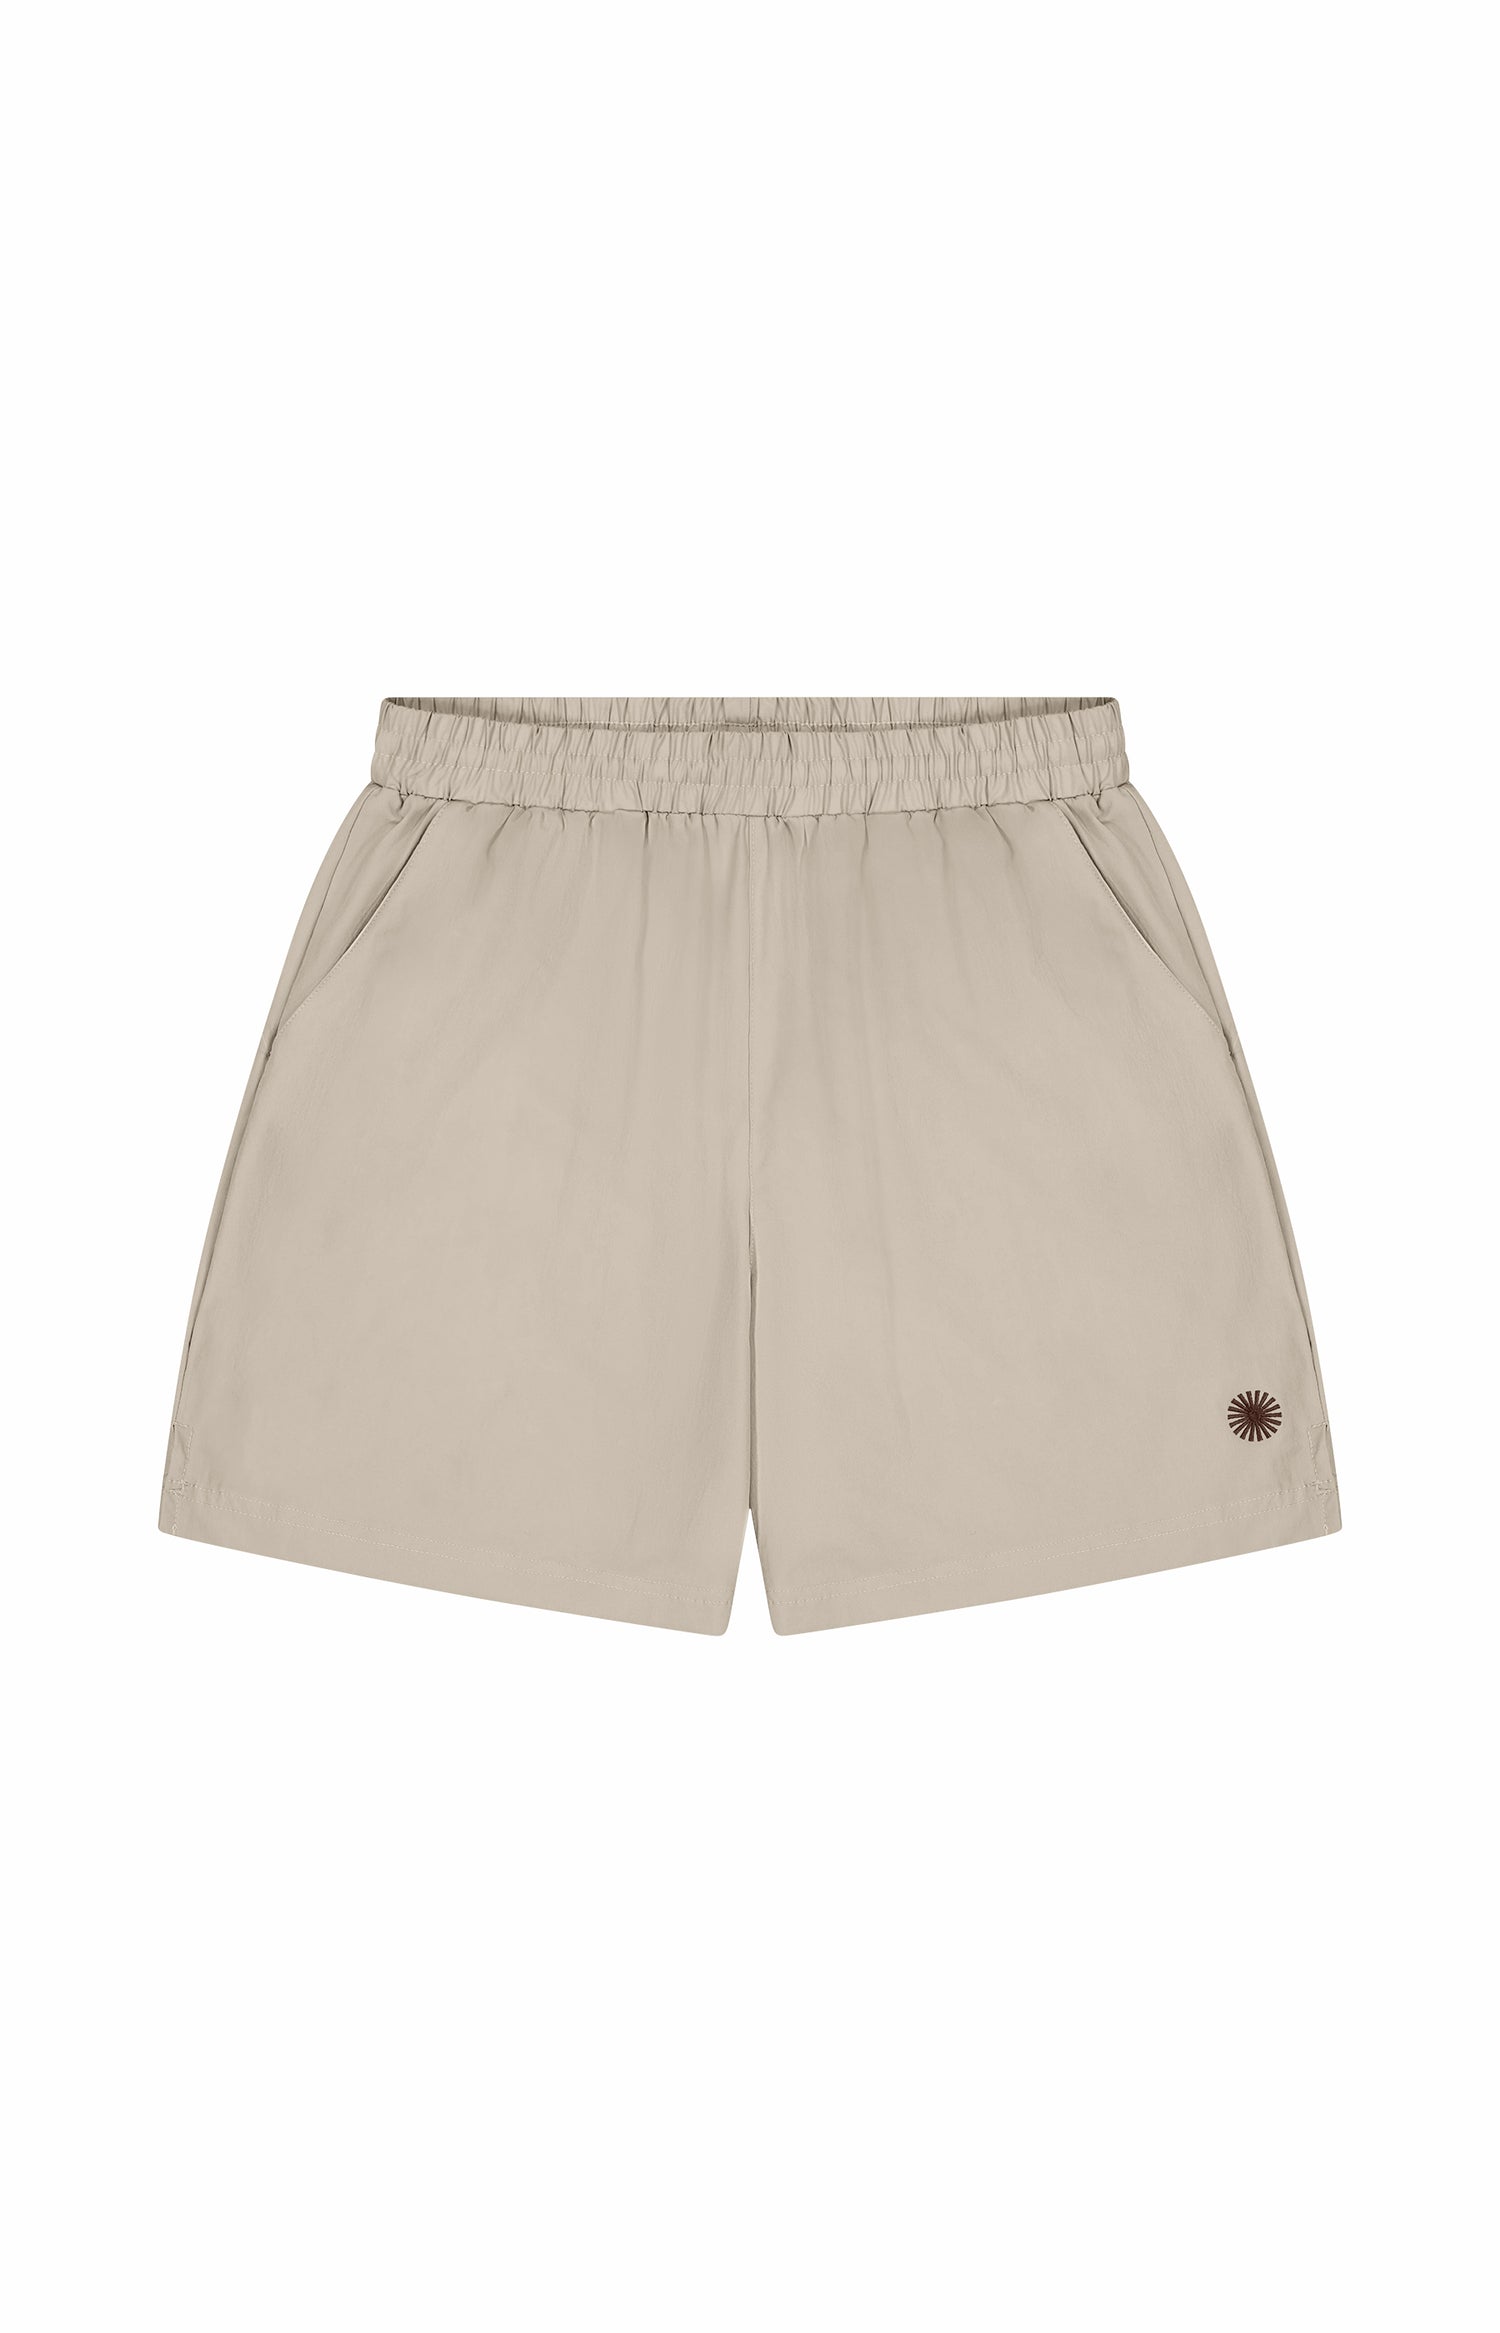 grey nylon shorts with small sun logo, two pockets, and elastic waistband